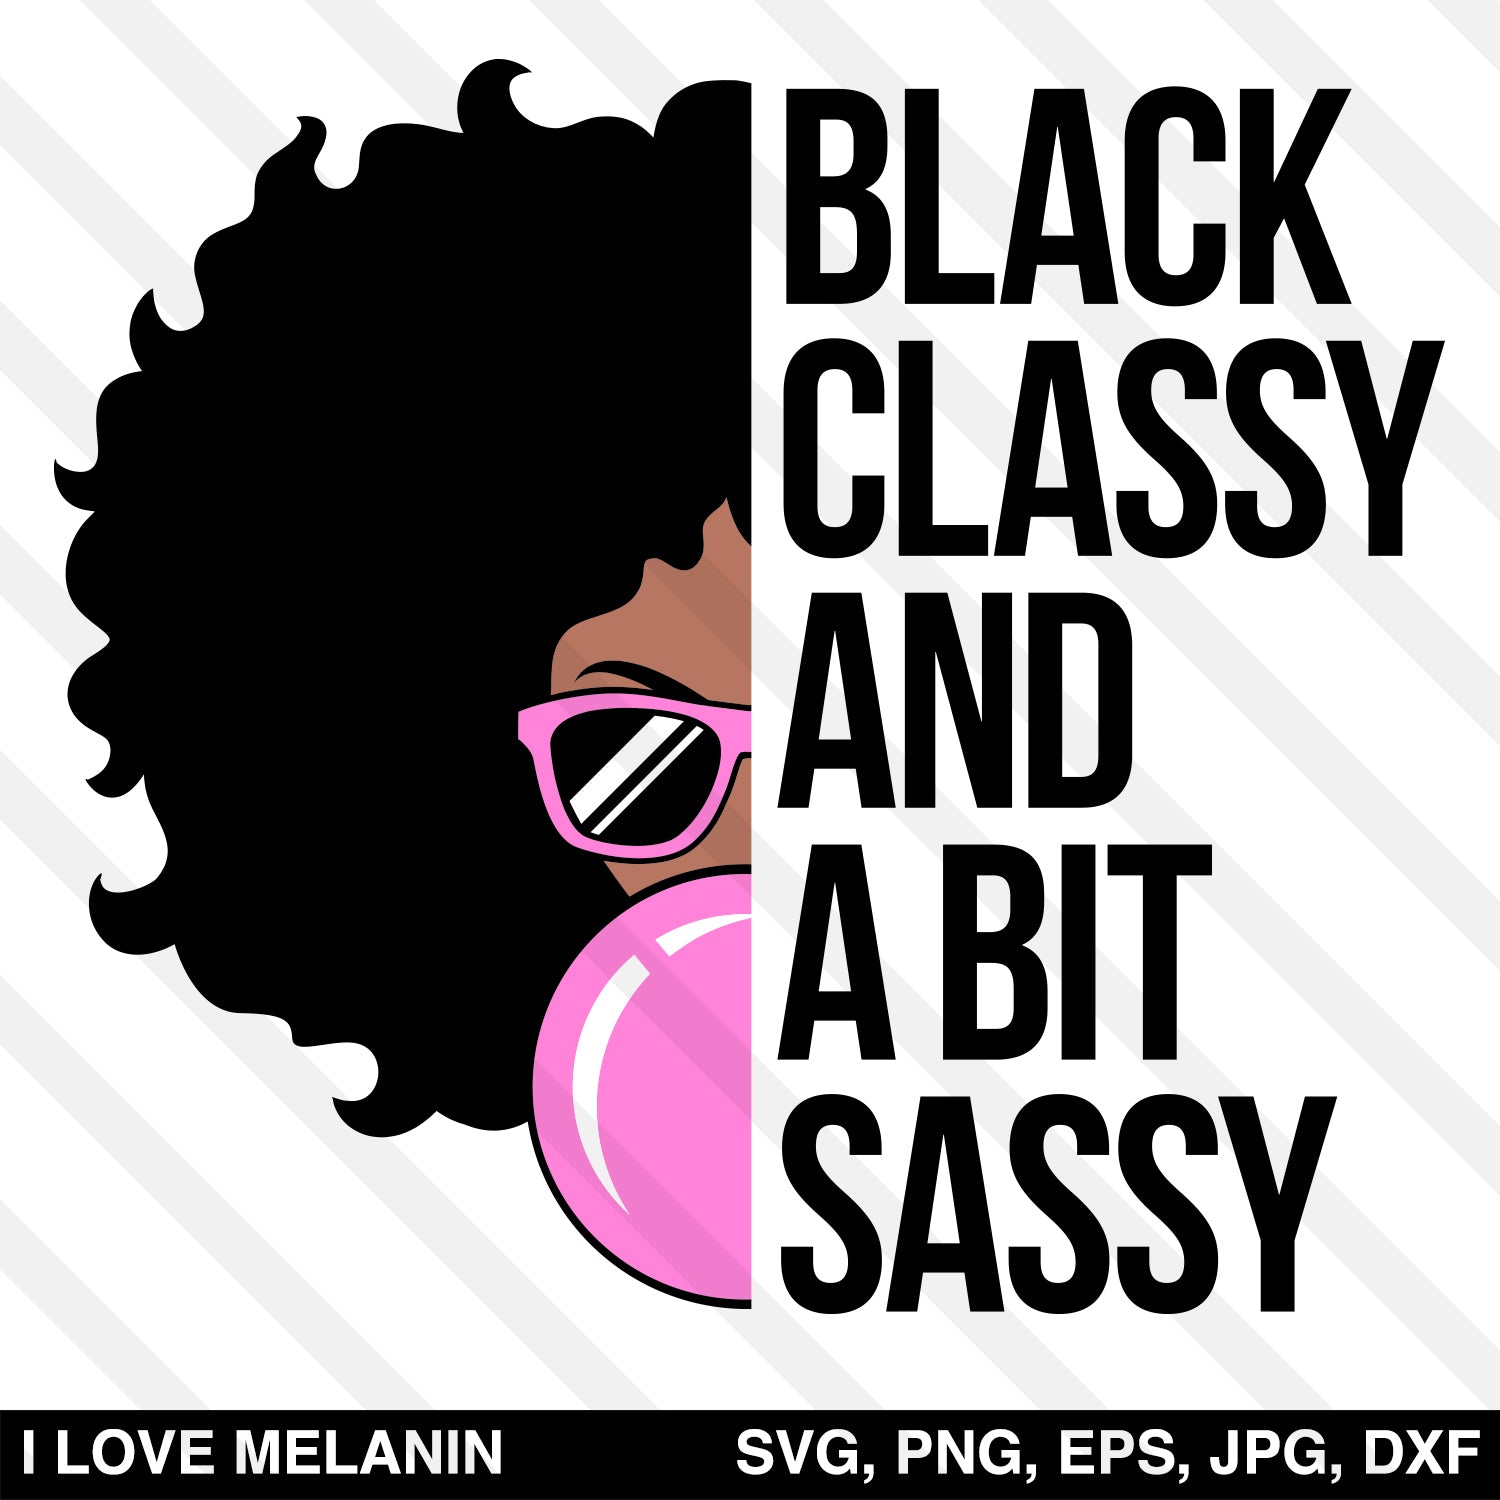 Download Black Classy And A Bit Sassy SVG - I Love Melanin